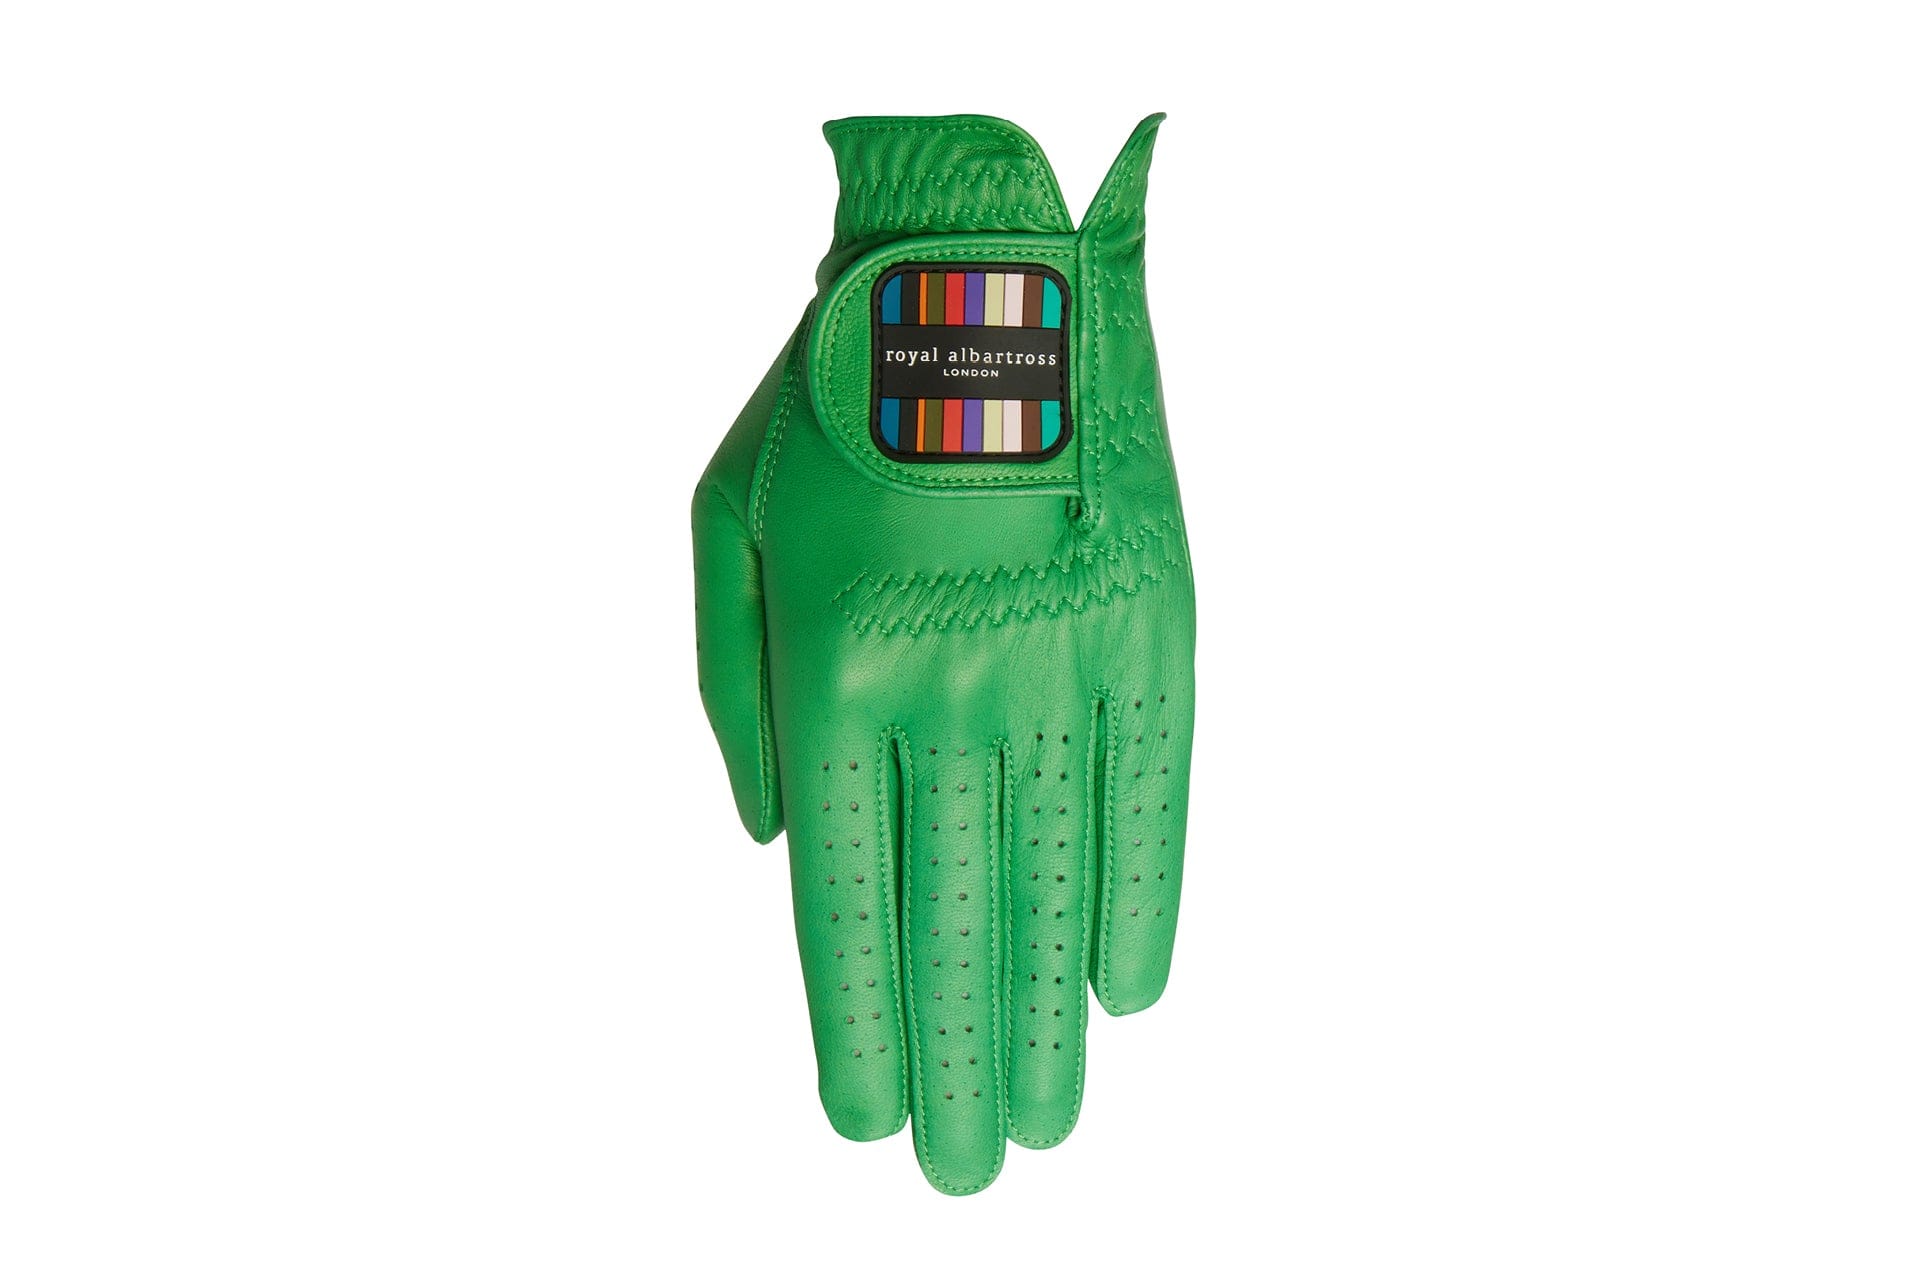 Women's Leather Golf Glove | Green Cabretta Leather | Royal Albartross Duchess v2 Green